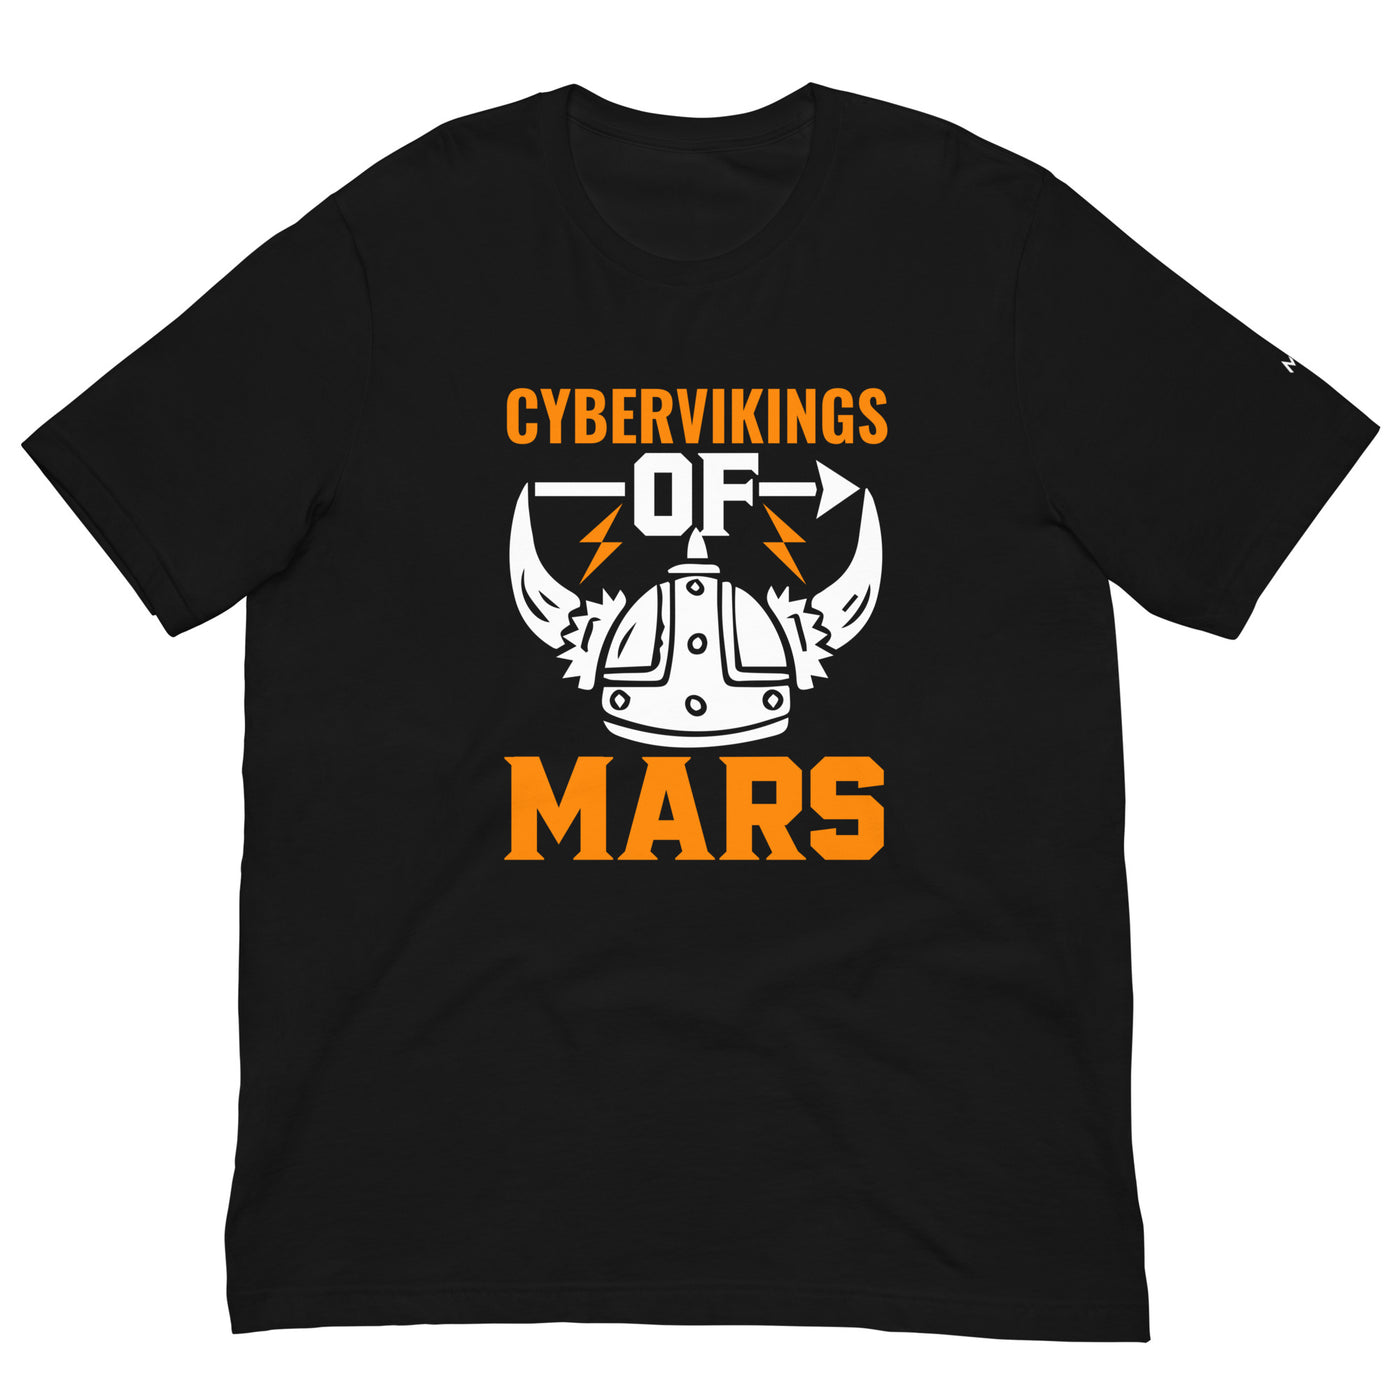 Cyberviking of Mars - Unisex t-shirt